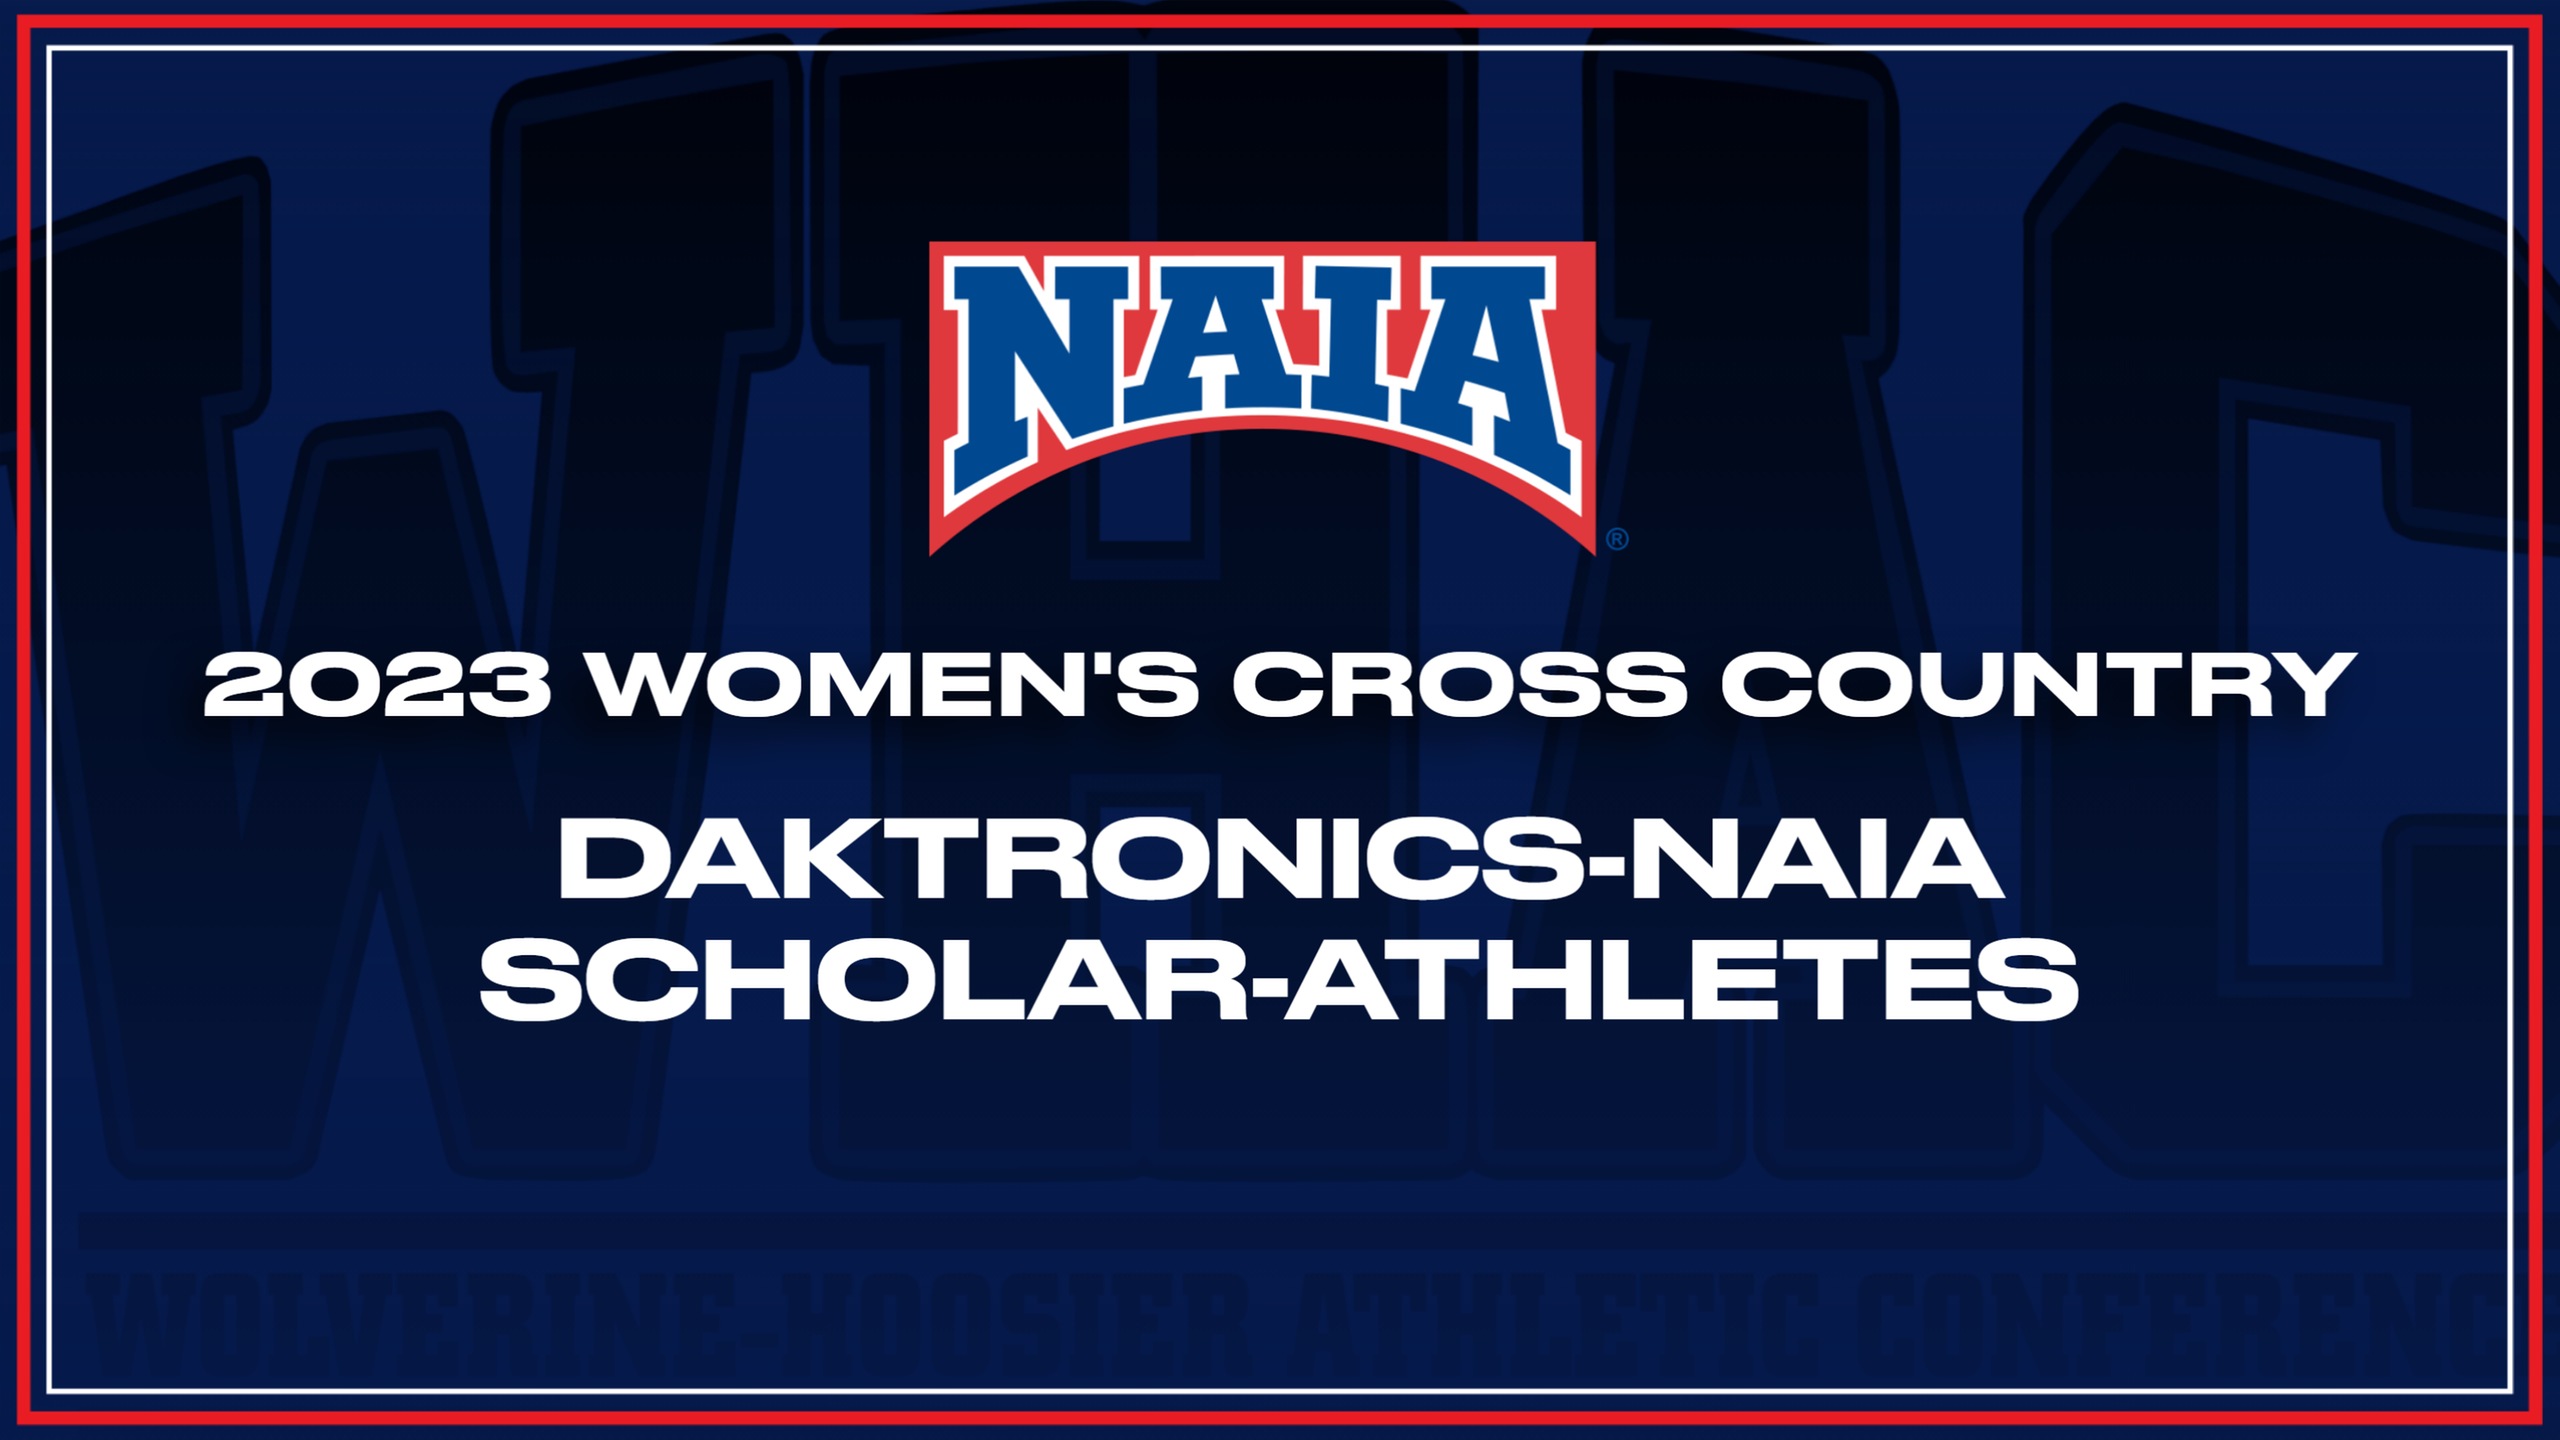 41 Women's Cross Country Runners Named Daktronics-NAIA Scholar-Athletes